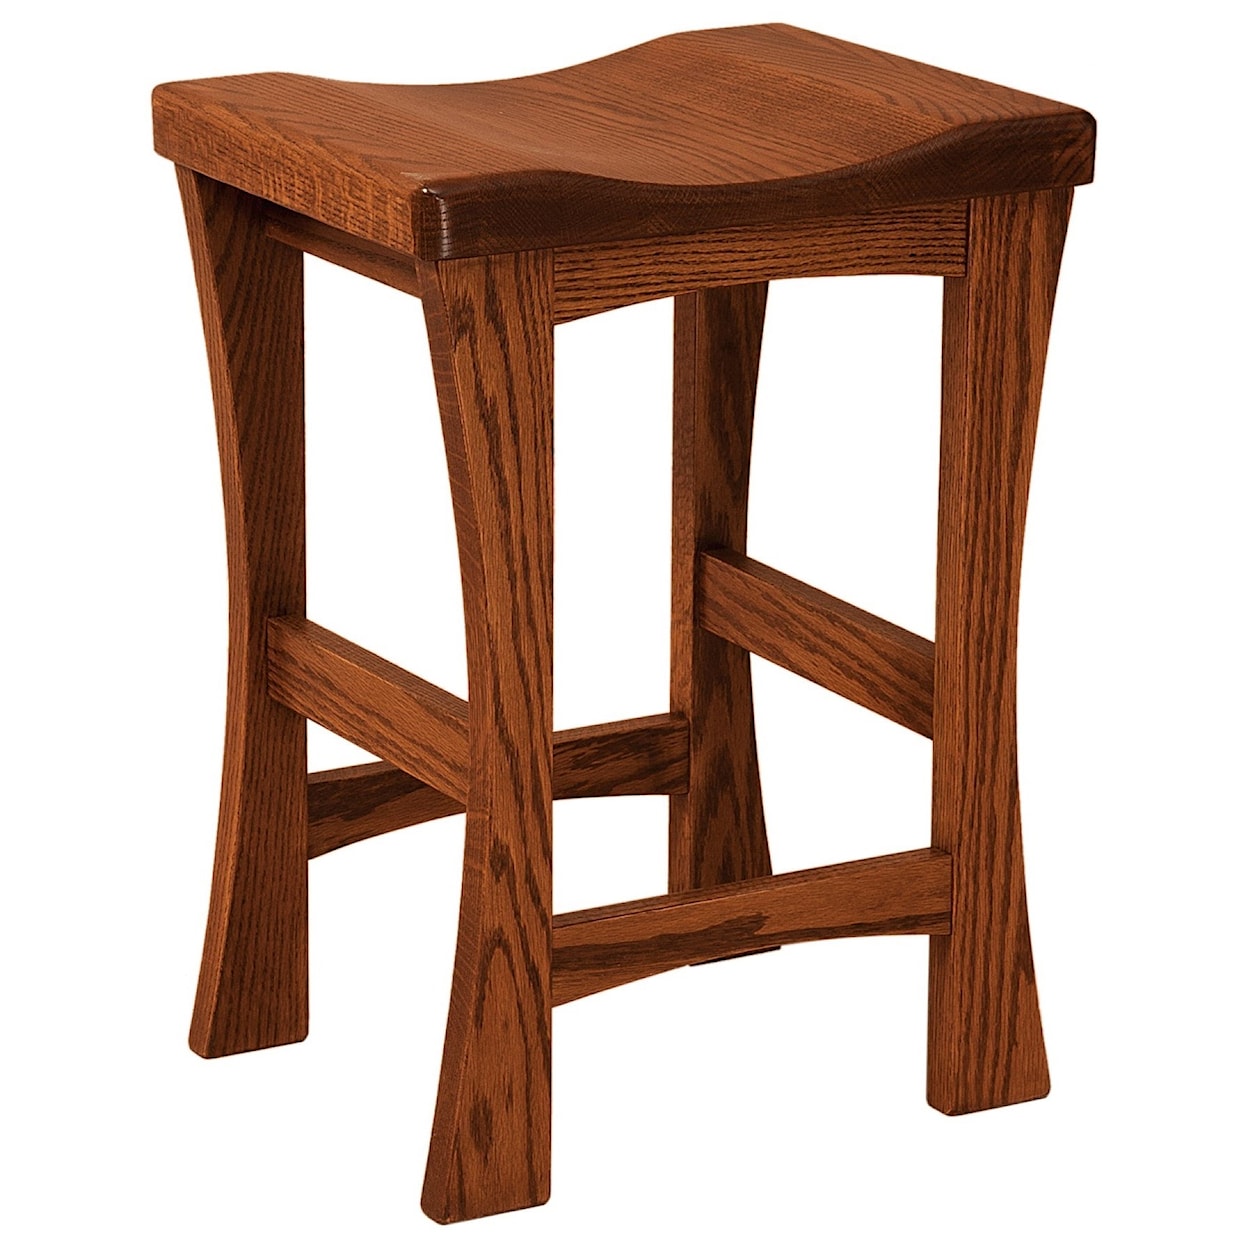 F&N Woodworking Kalston 24" Height Bar Stool - Wood Seat